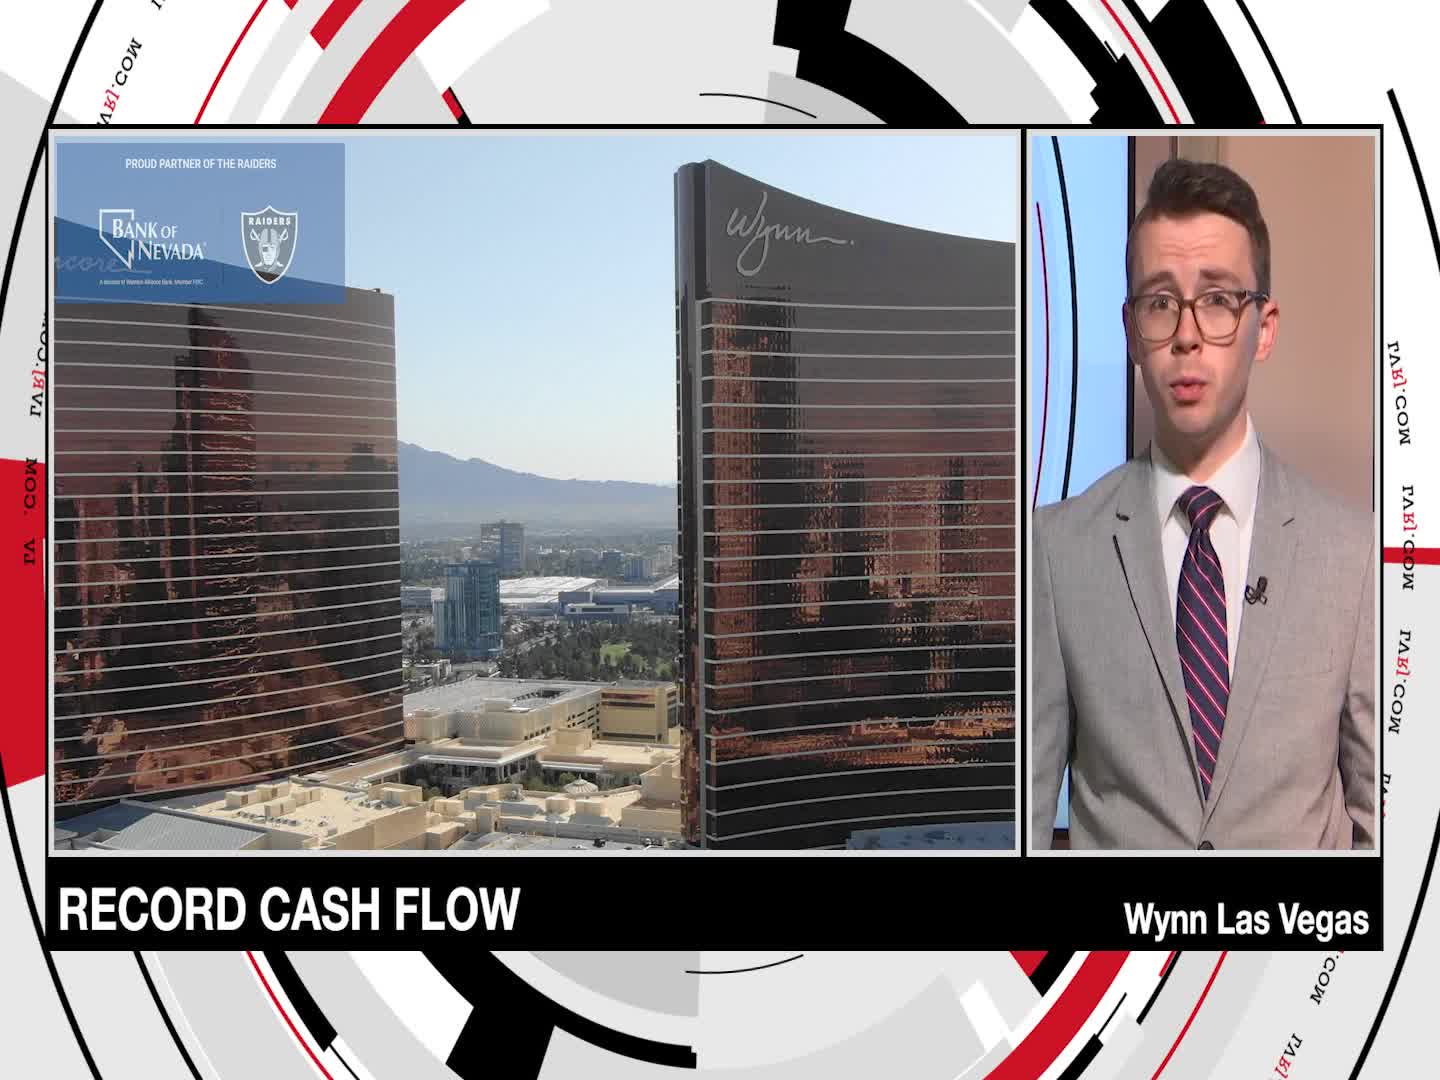 Wynn Las Vegas: Record Cash Flow